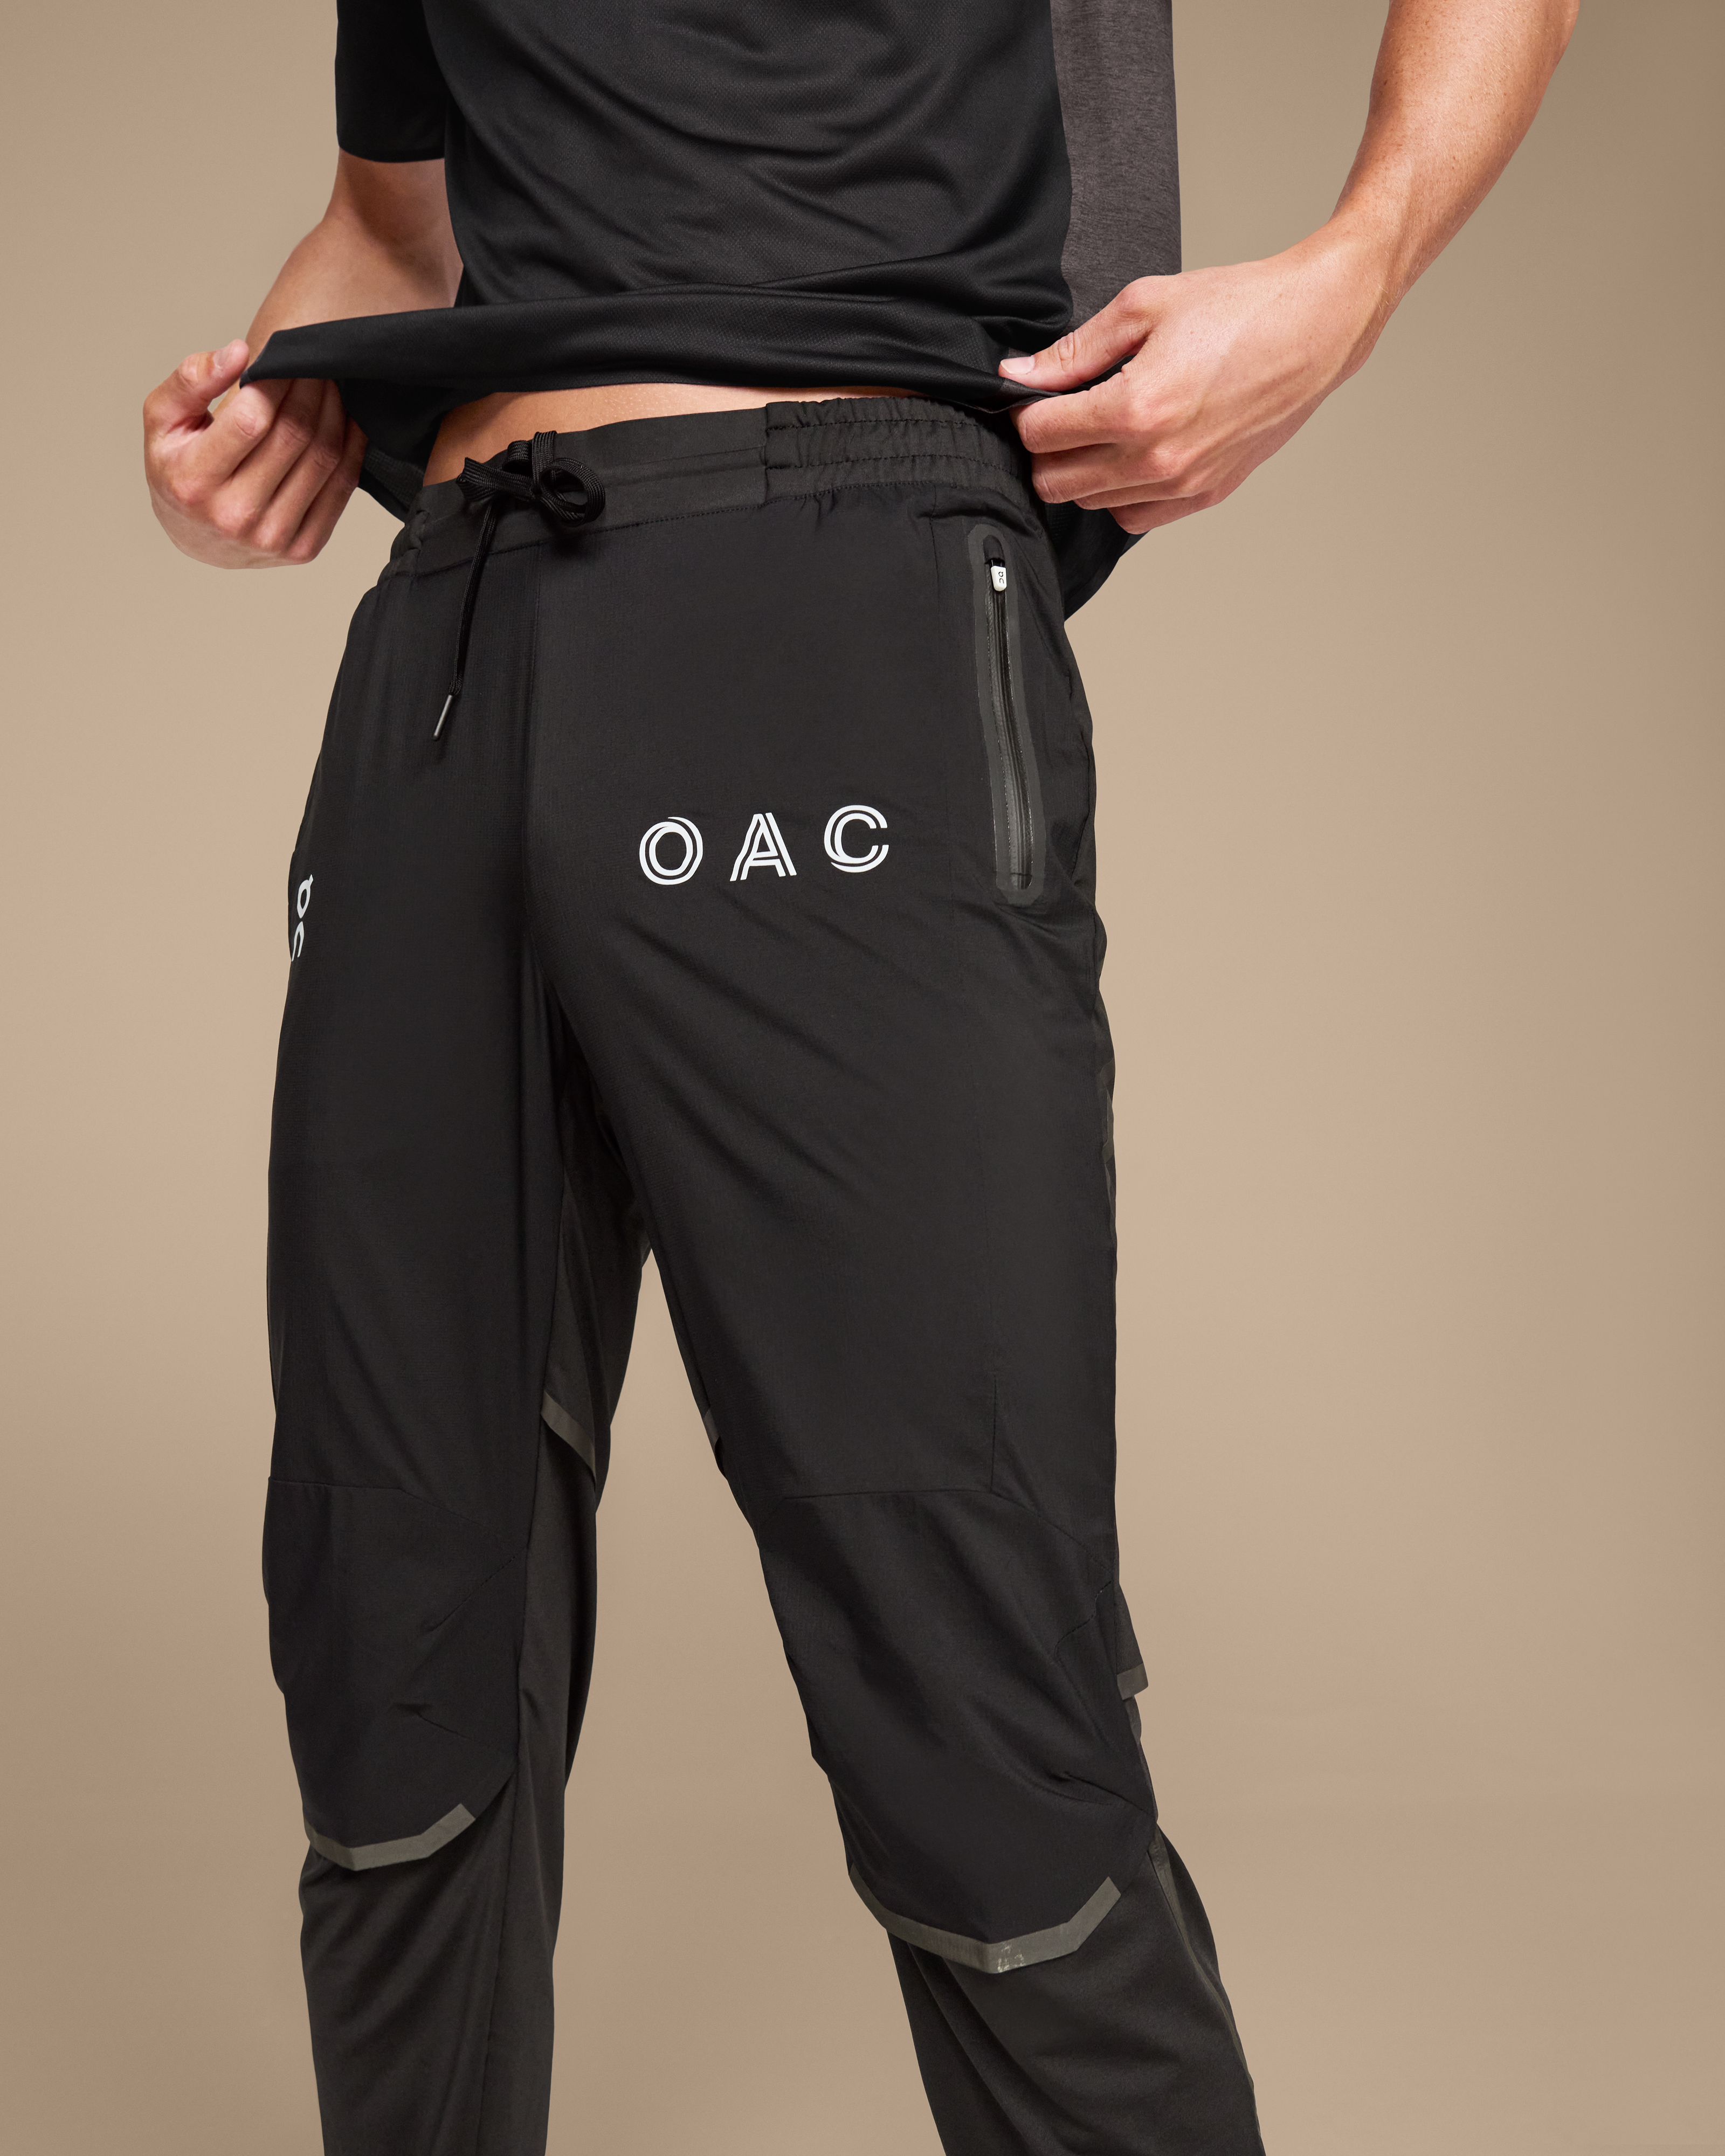 Men's Running Pants OAC | On Canada